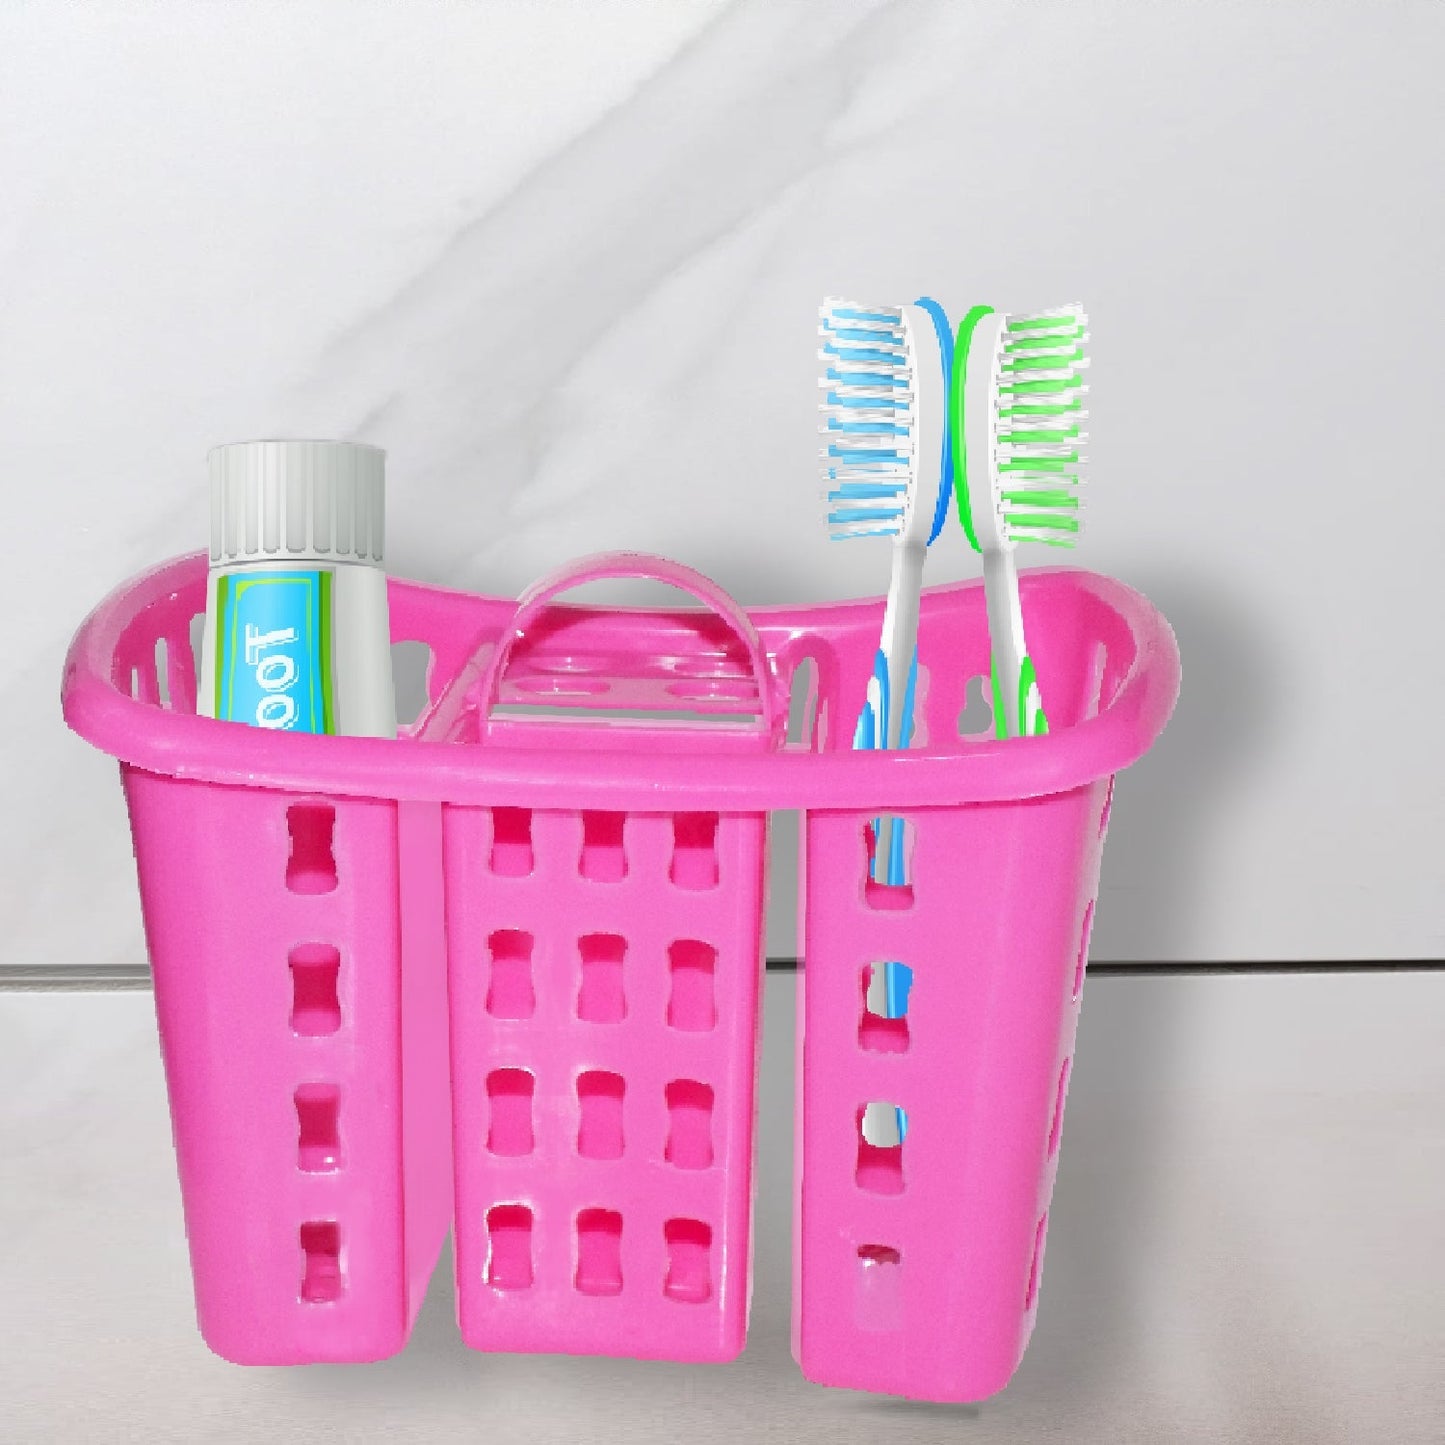 2450 Toothbrush Toothpaste Bathroom Organizer Stand 4-in-1 Holder DeoDap